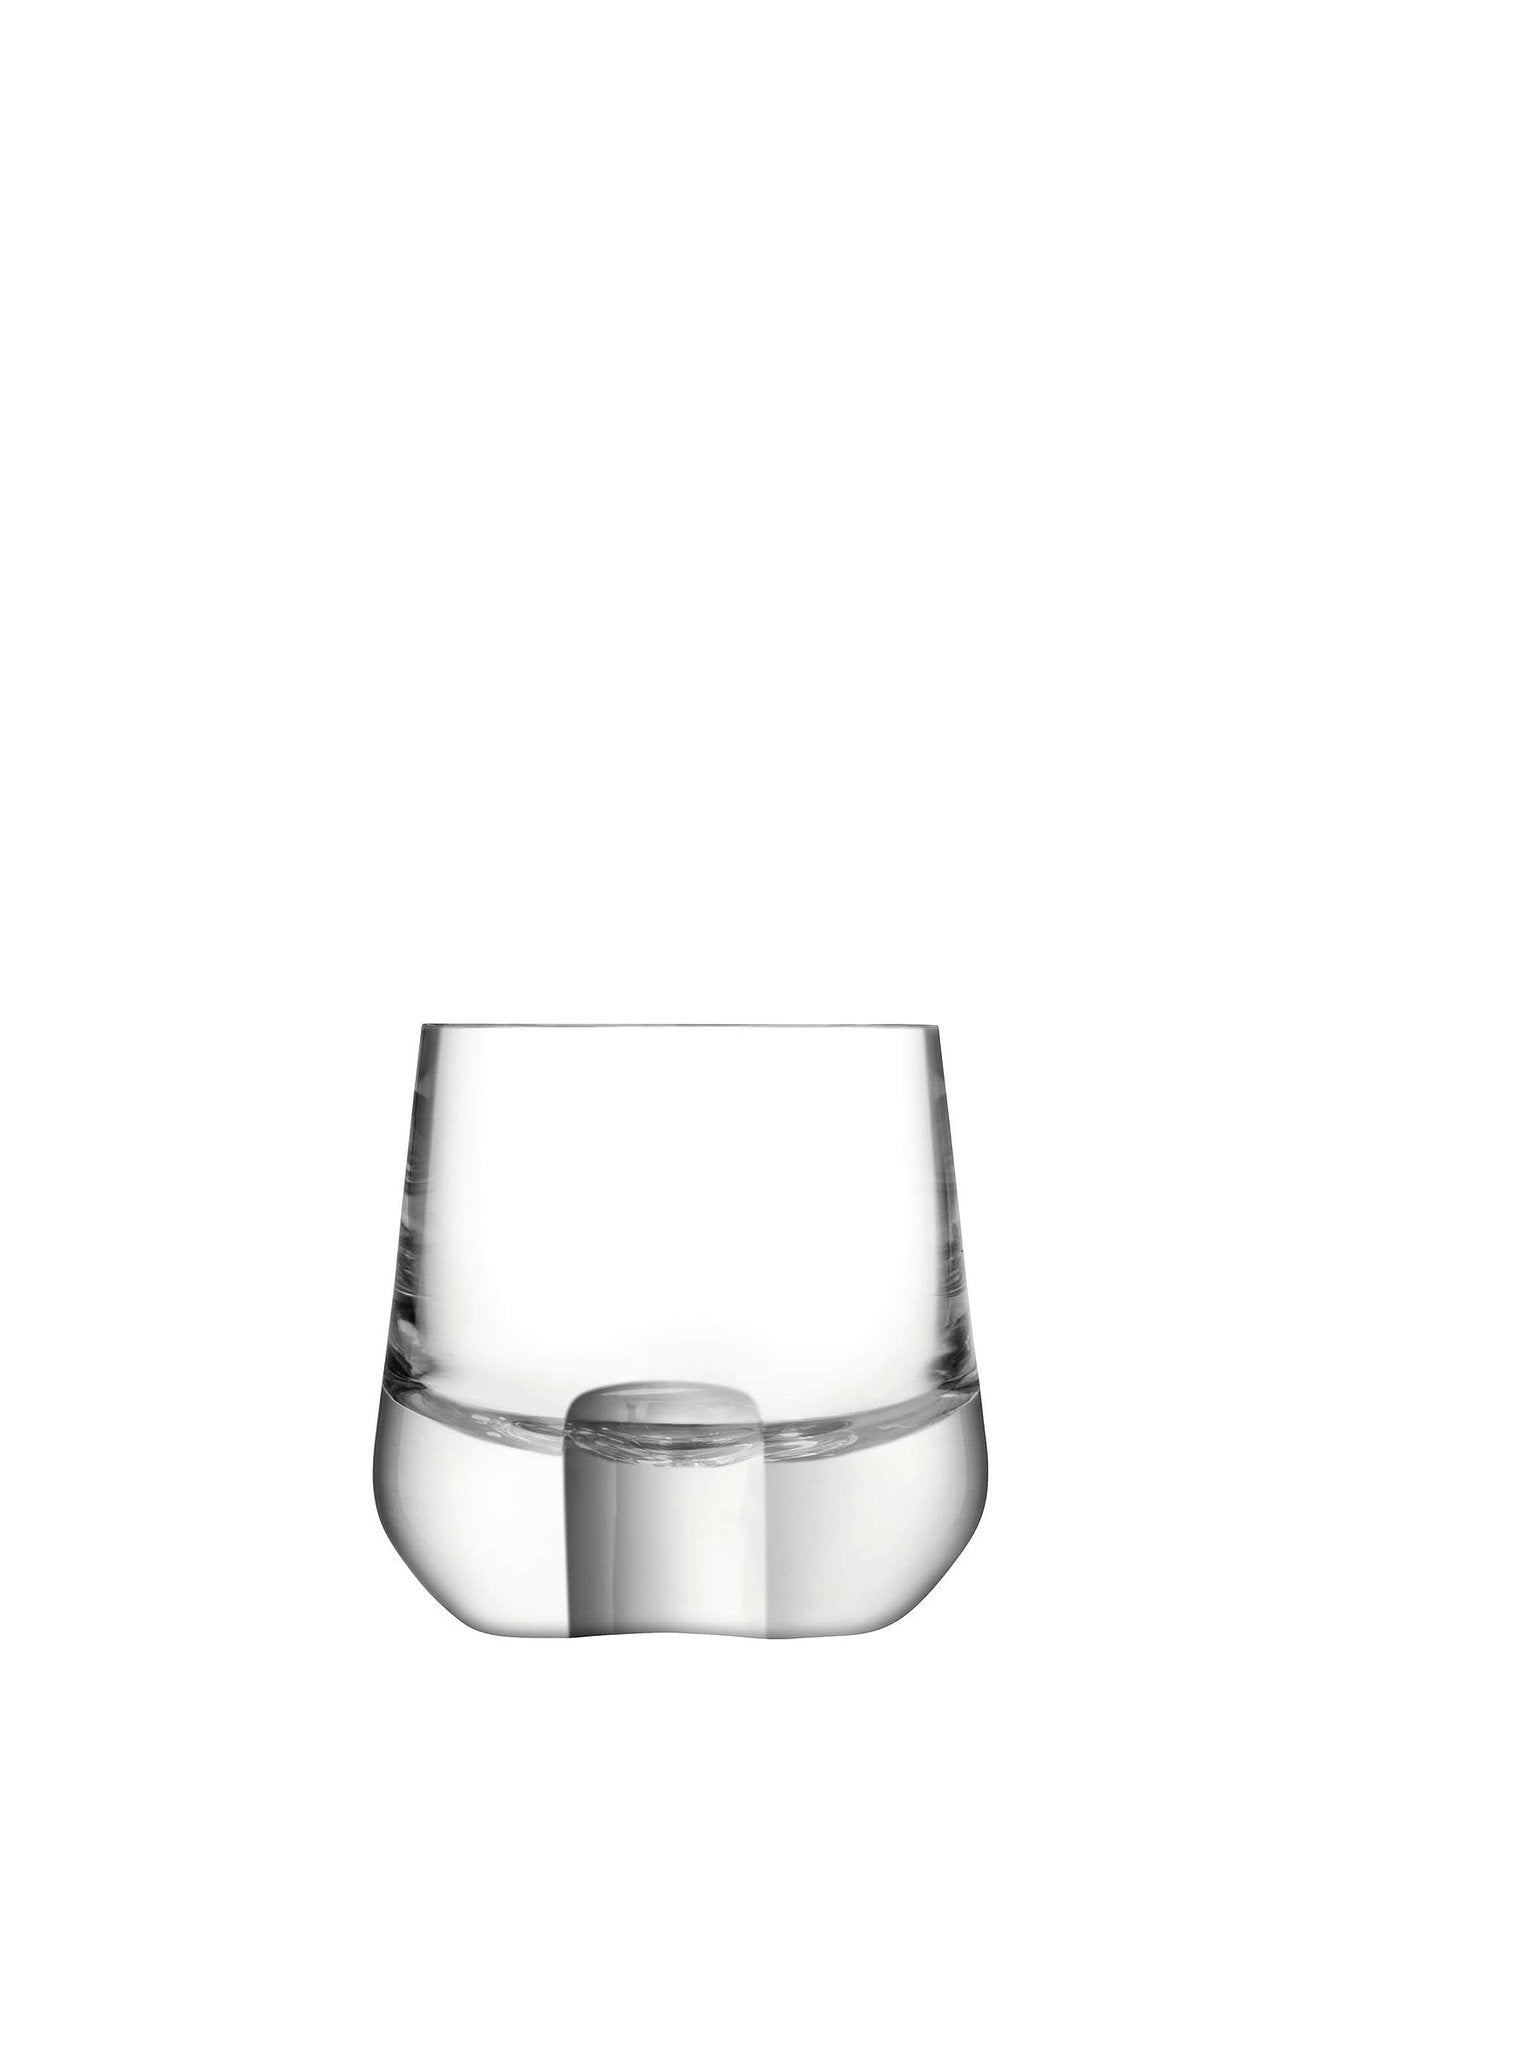 L.S.A. - Whiskey Cut Tumbler Glas 180 ml Set van 2 Stuks